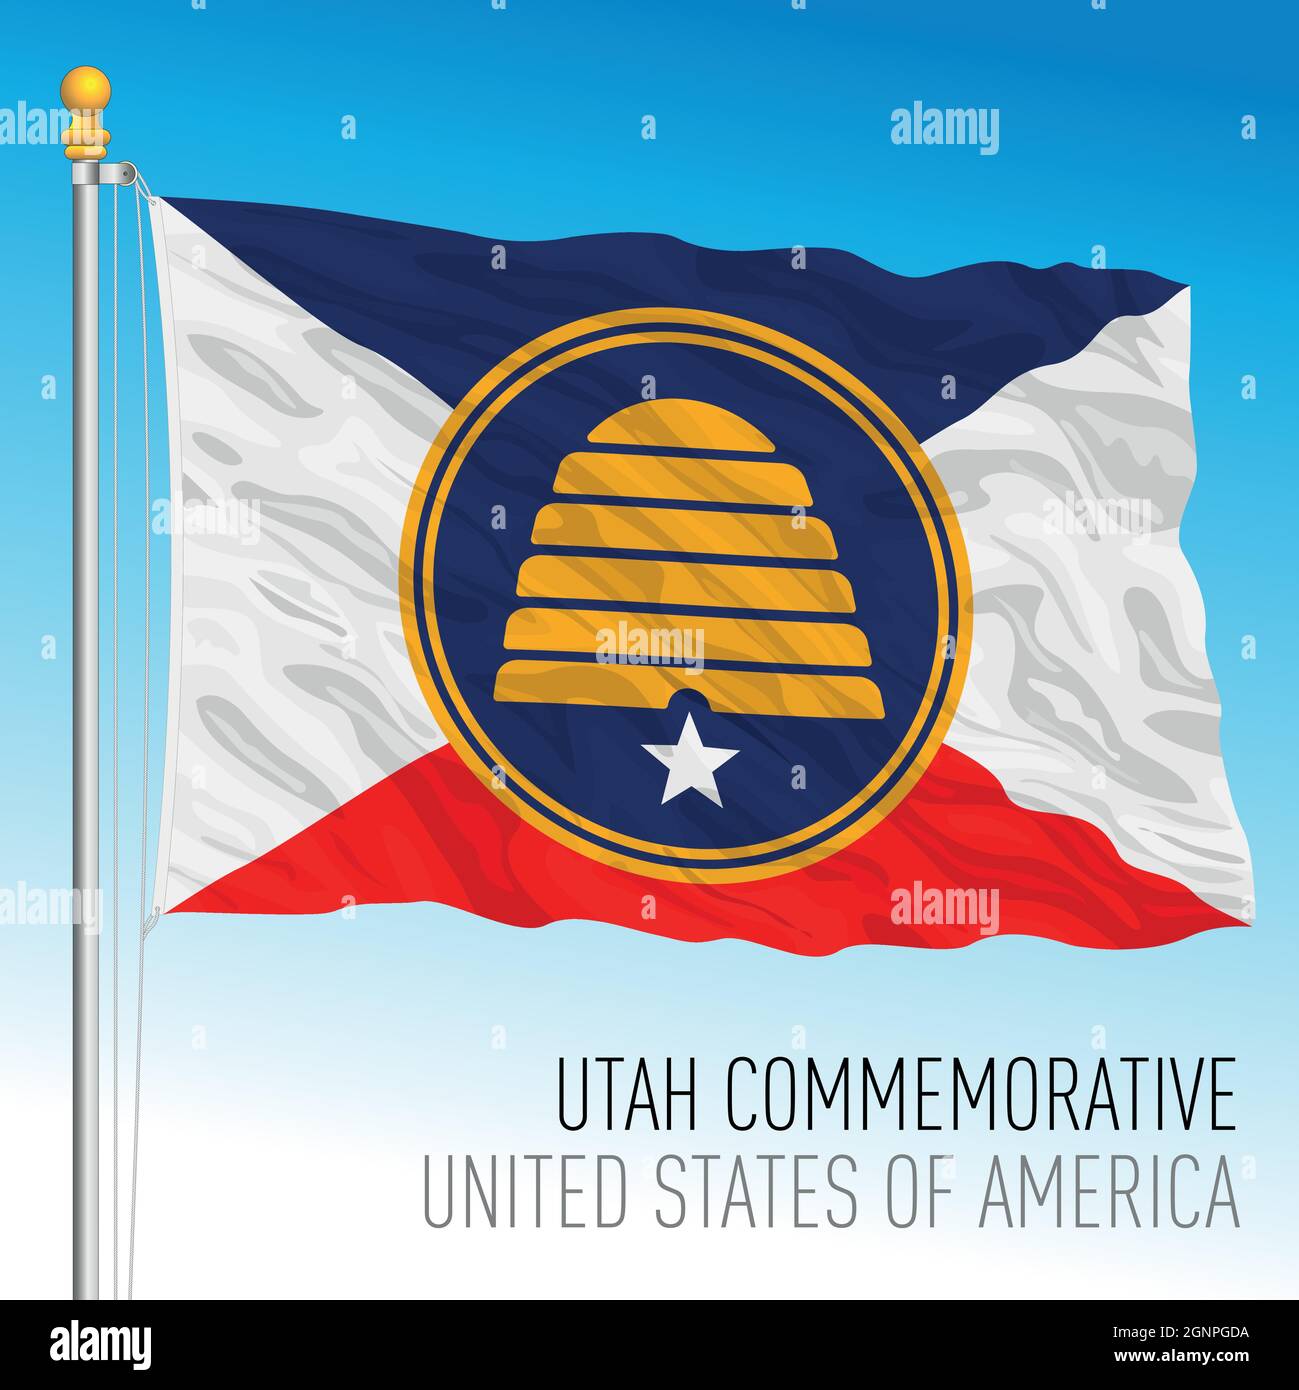 Utah State Commemorative flag, United States of America, vector illustration Stock Vector